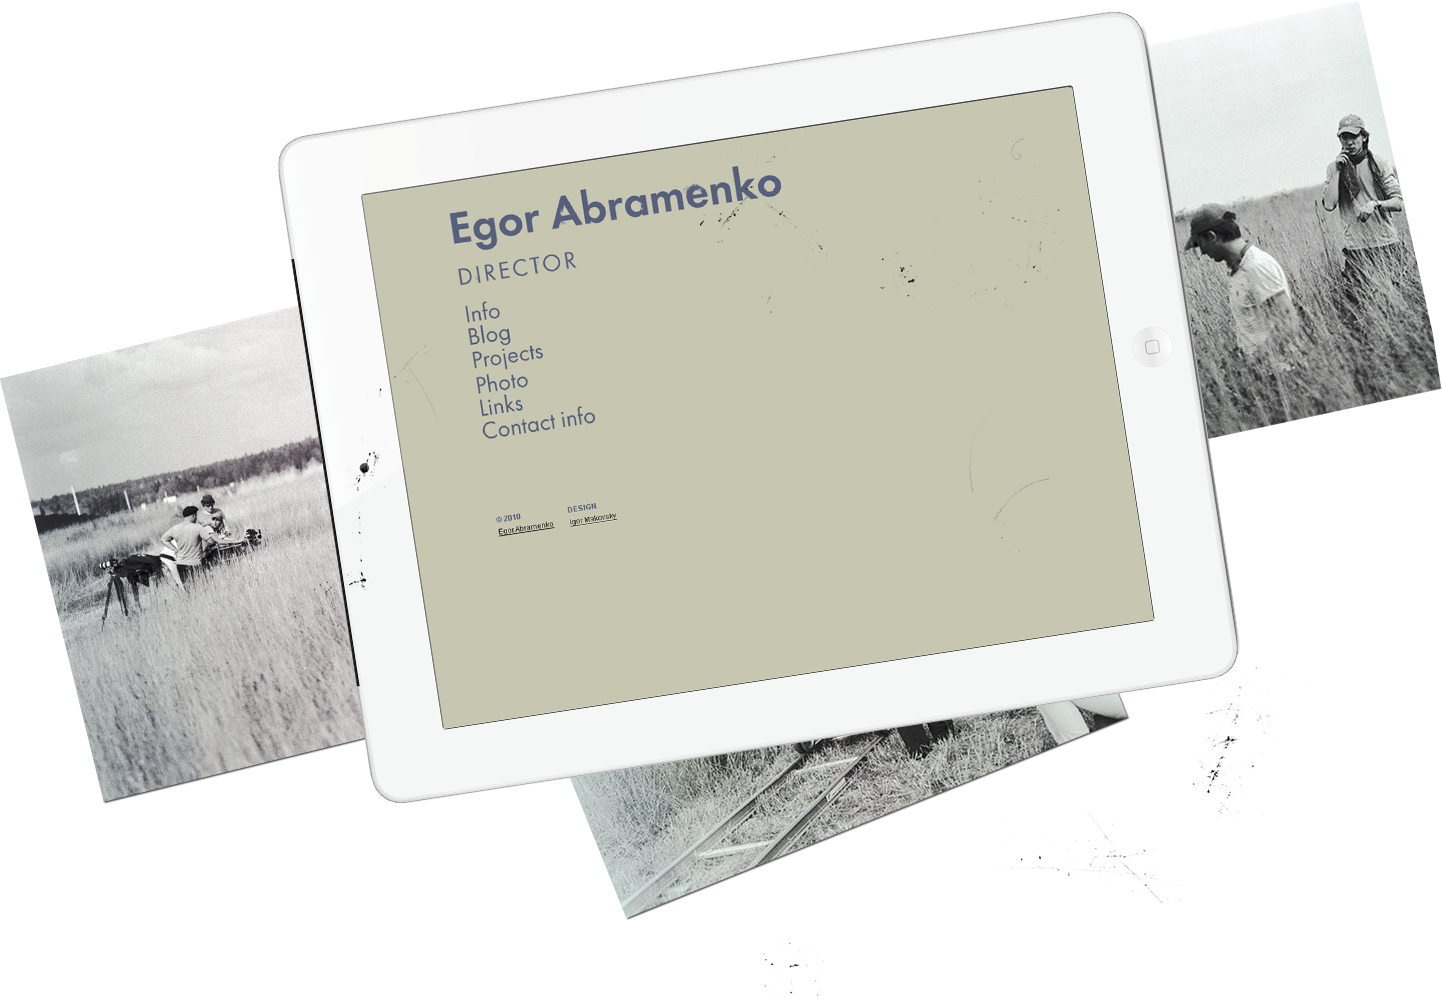 ipad with egor abramenko website